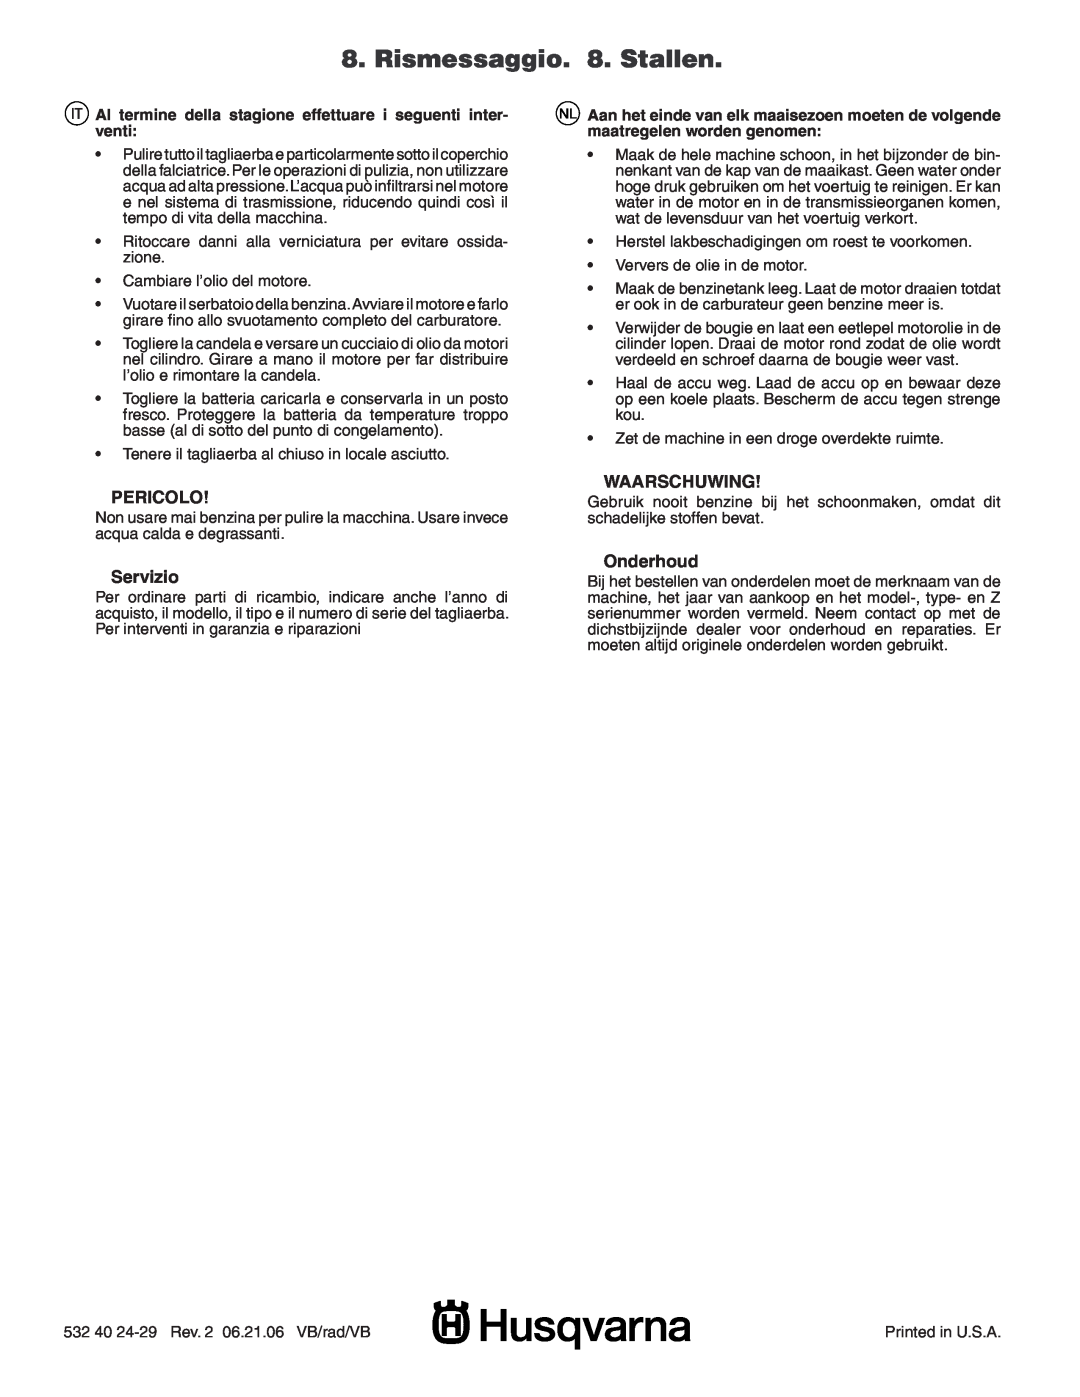 Husqvarna GTH260XP instruction manual Rismessaggio. 8. Stallen, Pericolo, Servizio, Waarschuwing, Onderhoud 